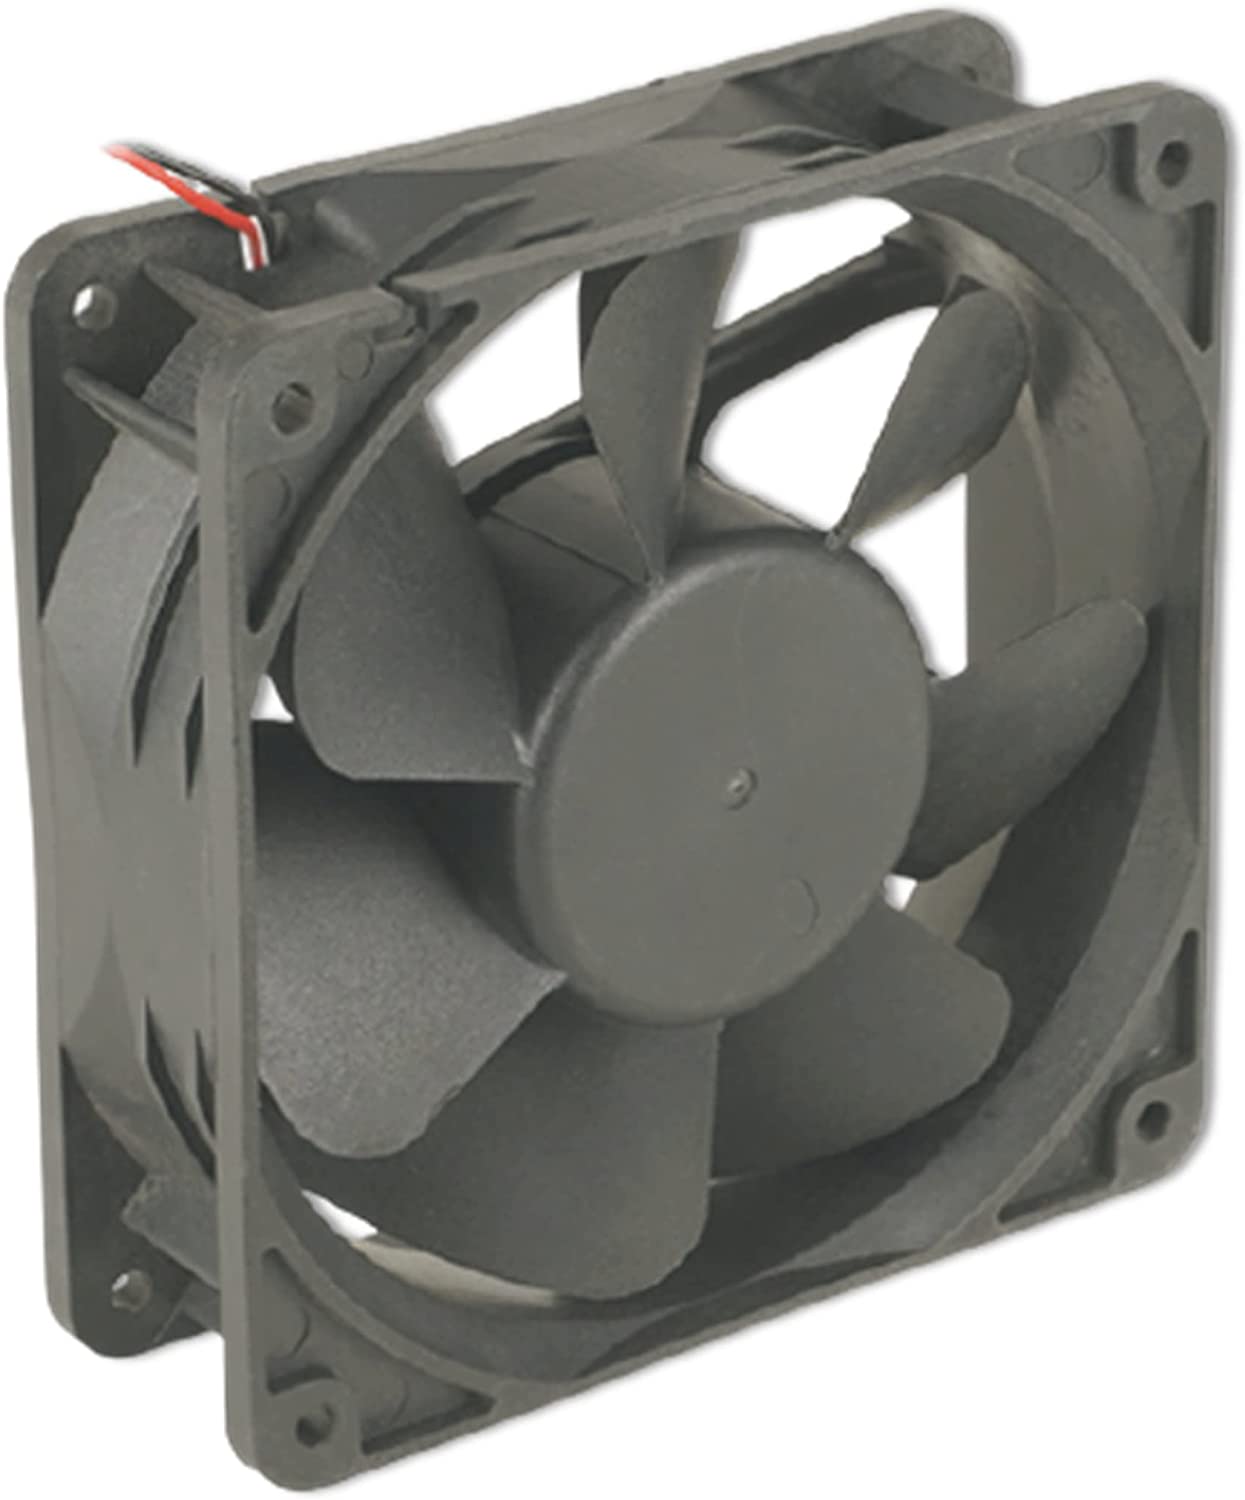 WAITCOOK Digital Fan Replacement for Masterbuilt Gravity Series 560/1050 XL Digital Charcoal Grill + Smokers